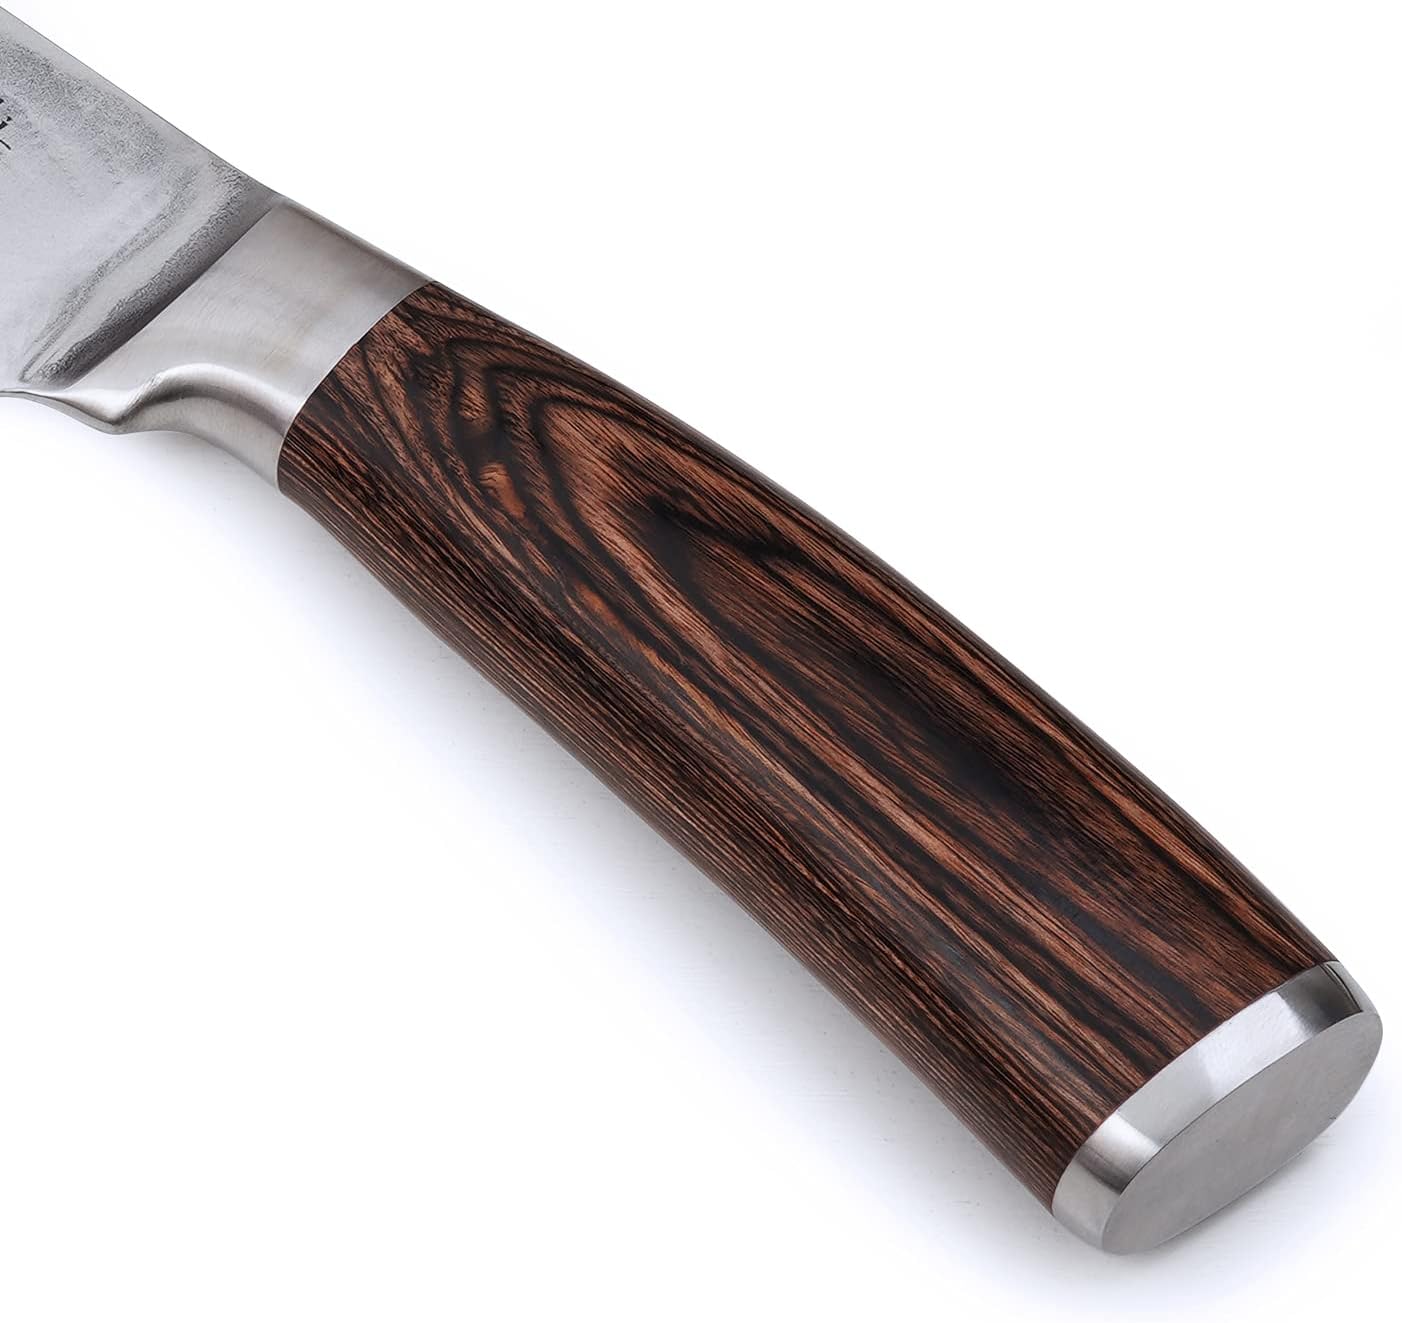 Wakoli Edib Damascus Knife Nakiri with Sharp 6.8 Inch Blade made of 67 Layers Steel with VG10 Core I Professional Kitchen Knife made of Genuine Damascus Steel with Pakka Wood Handle